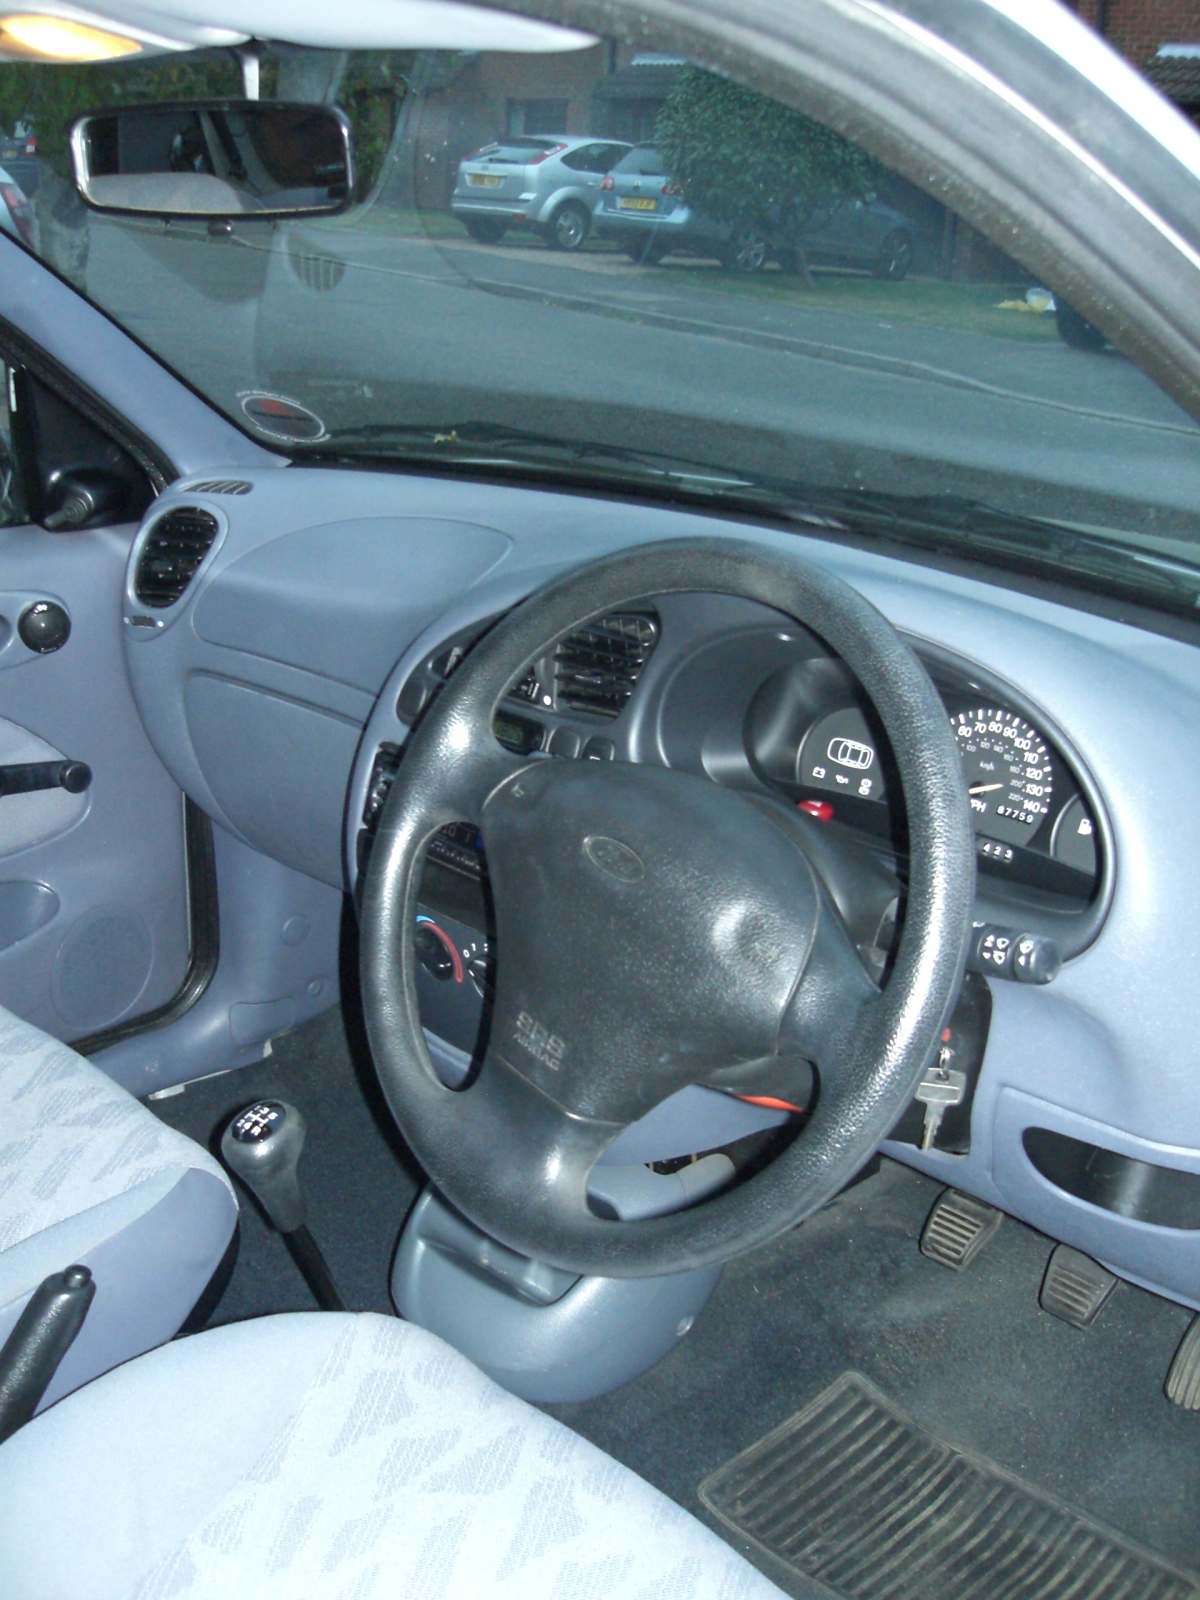 Ford Fiesta 1.3 1997 Dashboard